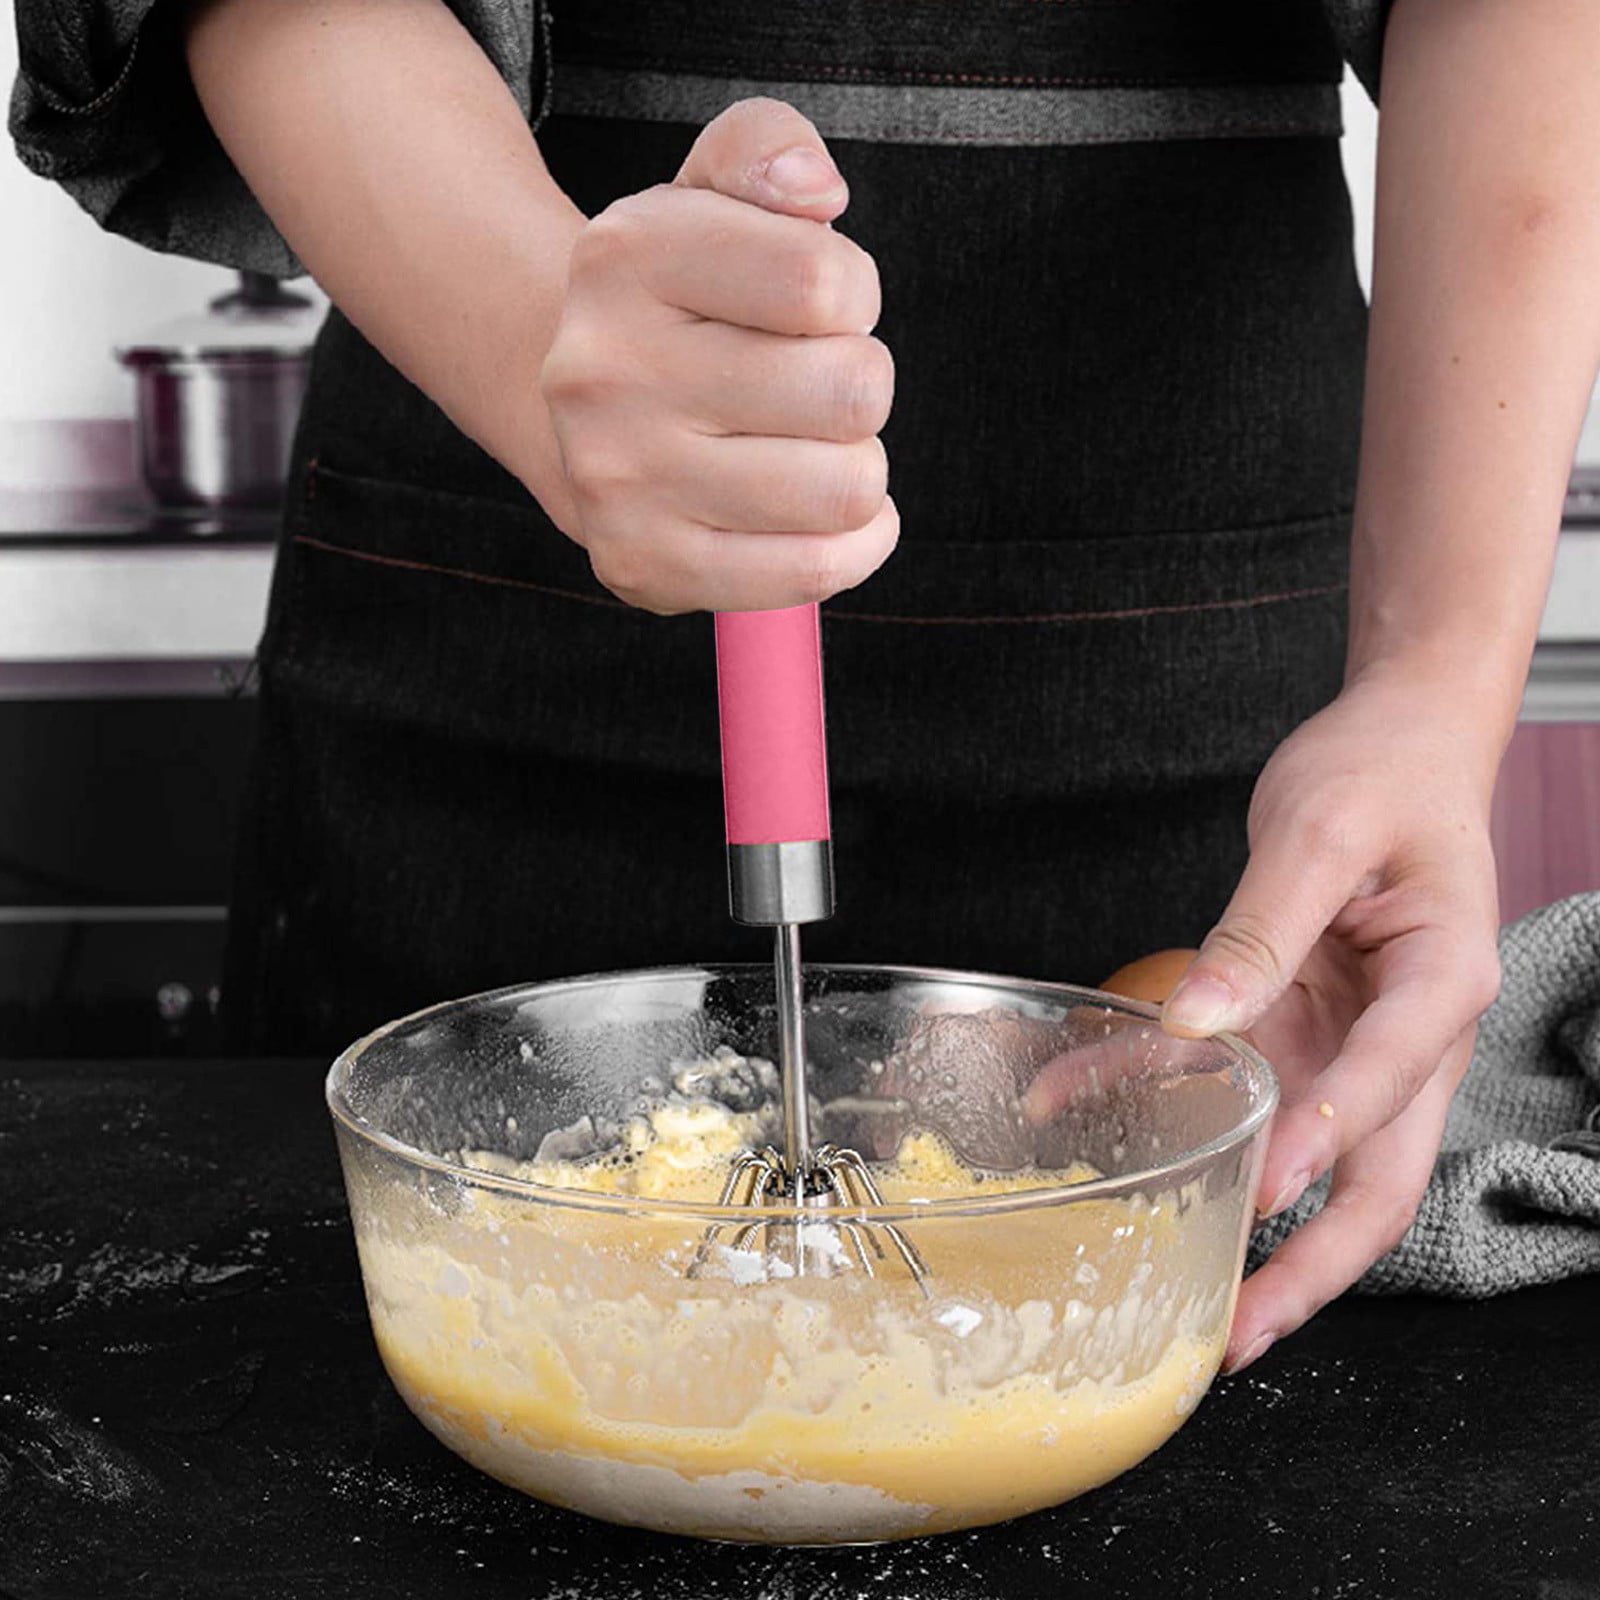 IKevan_ Silicone Hand Mixer Handheld Eggbeater Mixer Premium Heat Resistant Baking Tools